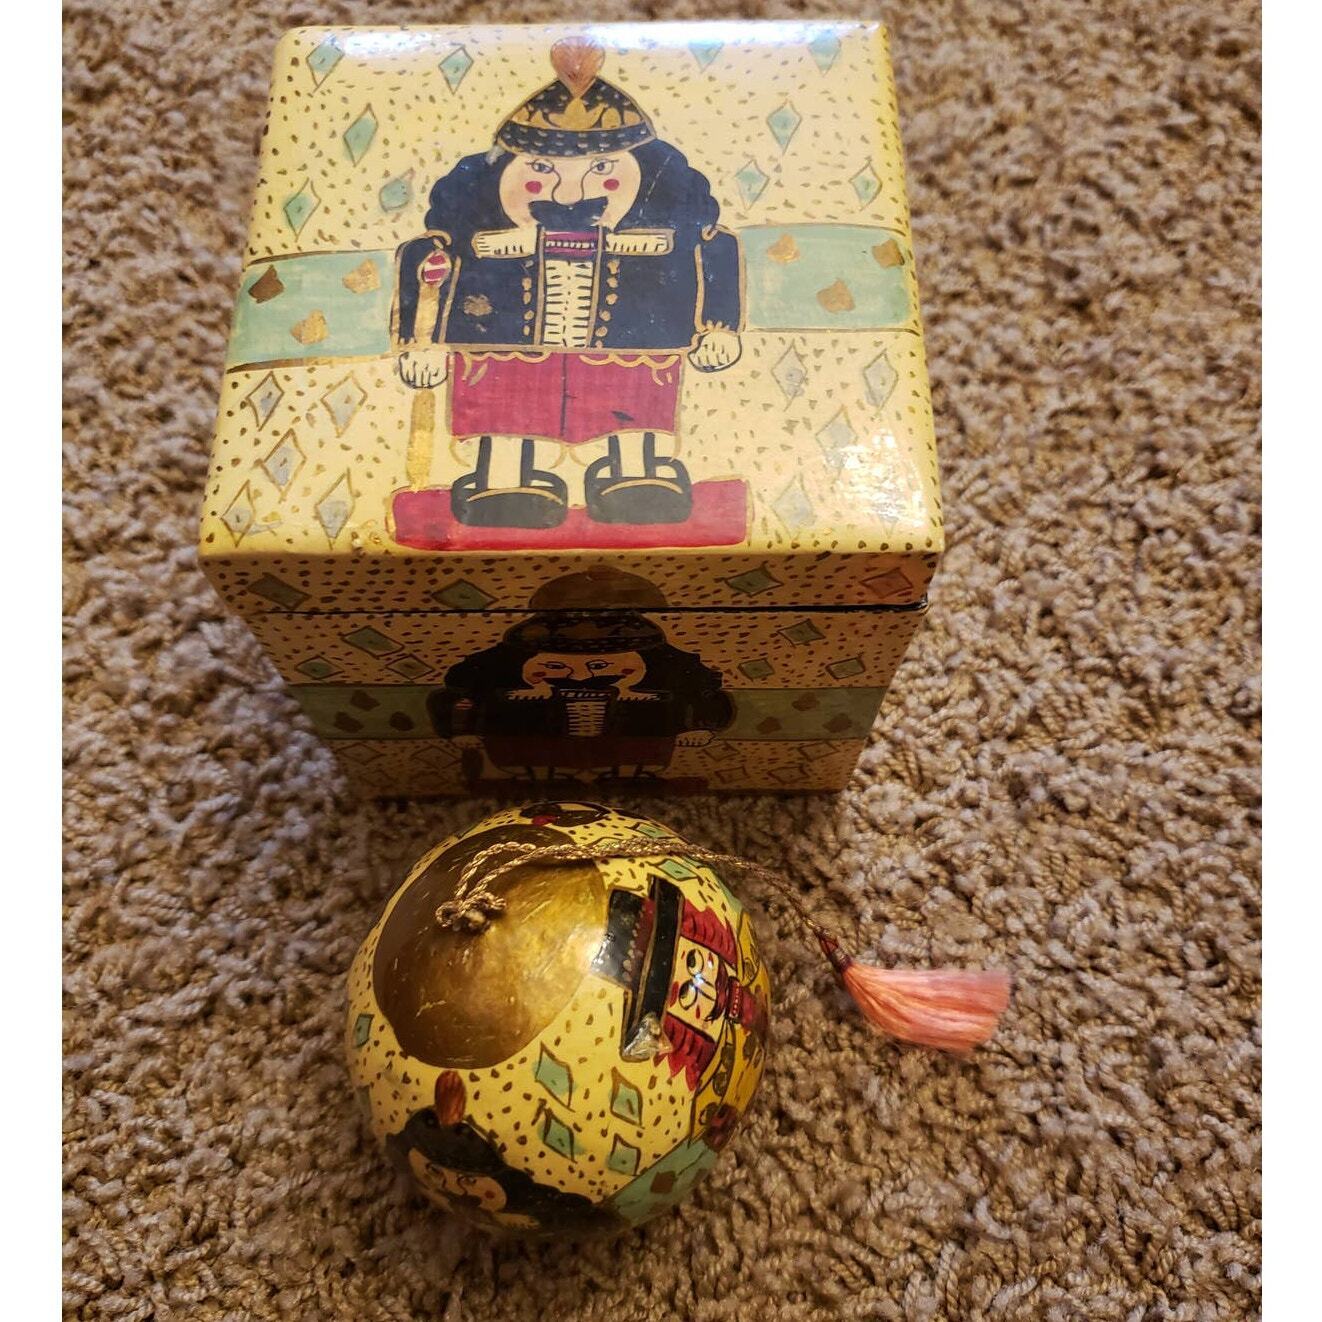 Vintage Nutcracker Decorative Ornament Christmas Tree Decor India with Box